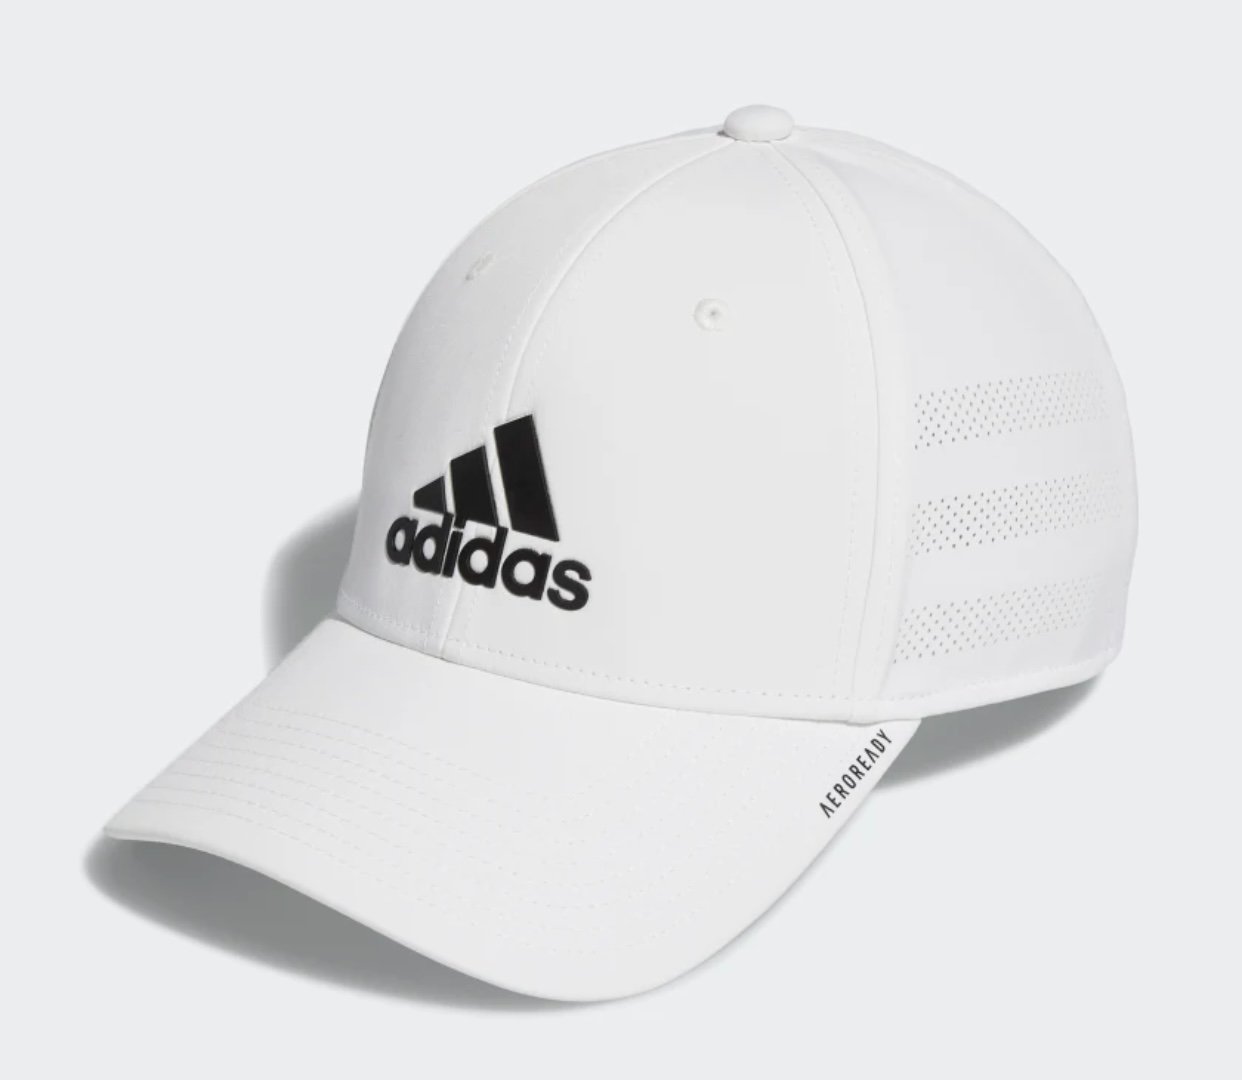 Adidas White Women's Hat